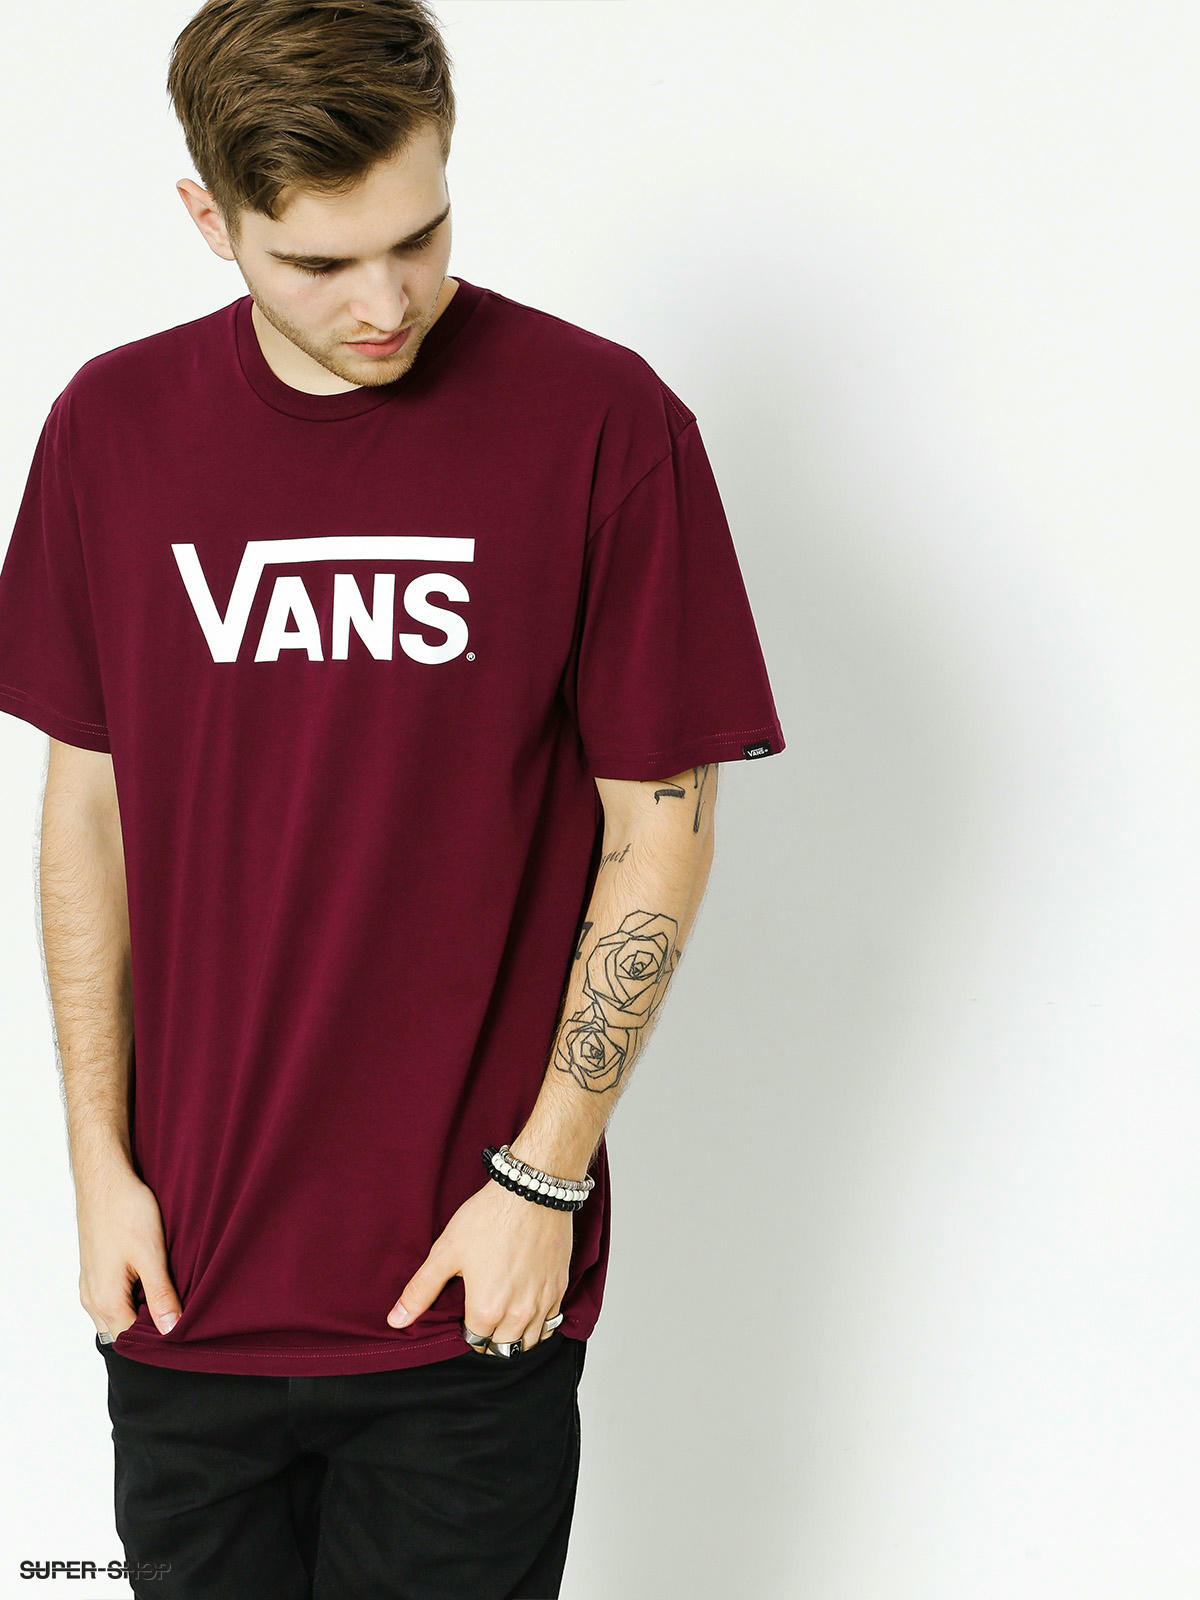 Vans T-shirt Classic (burgundy/white)